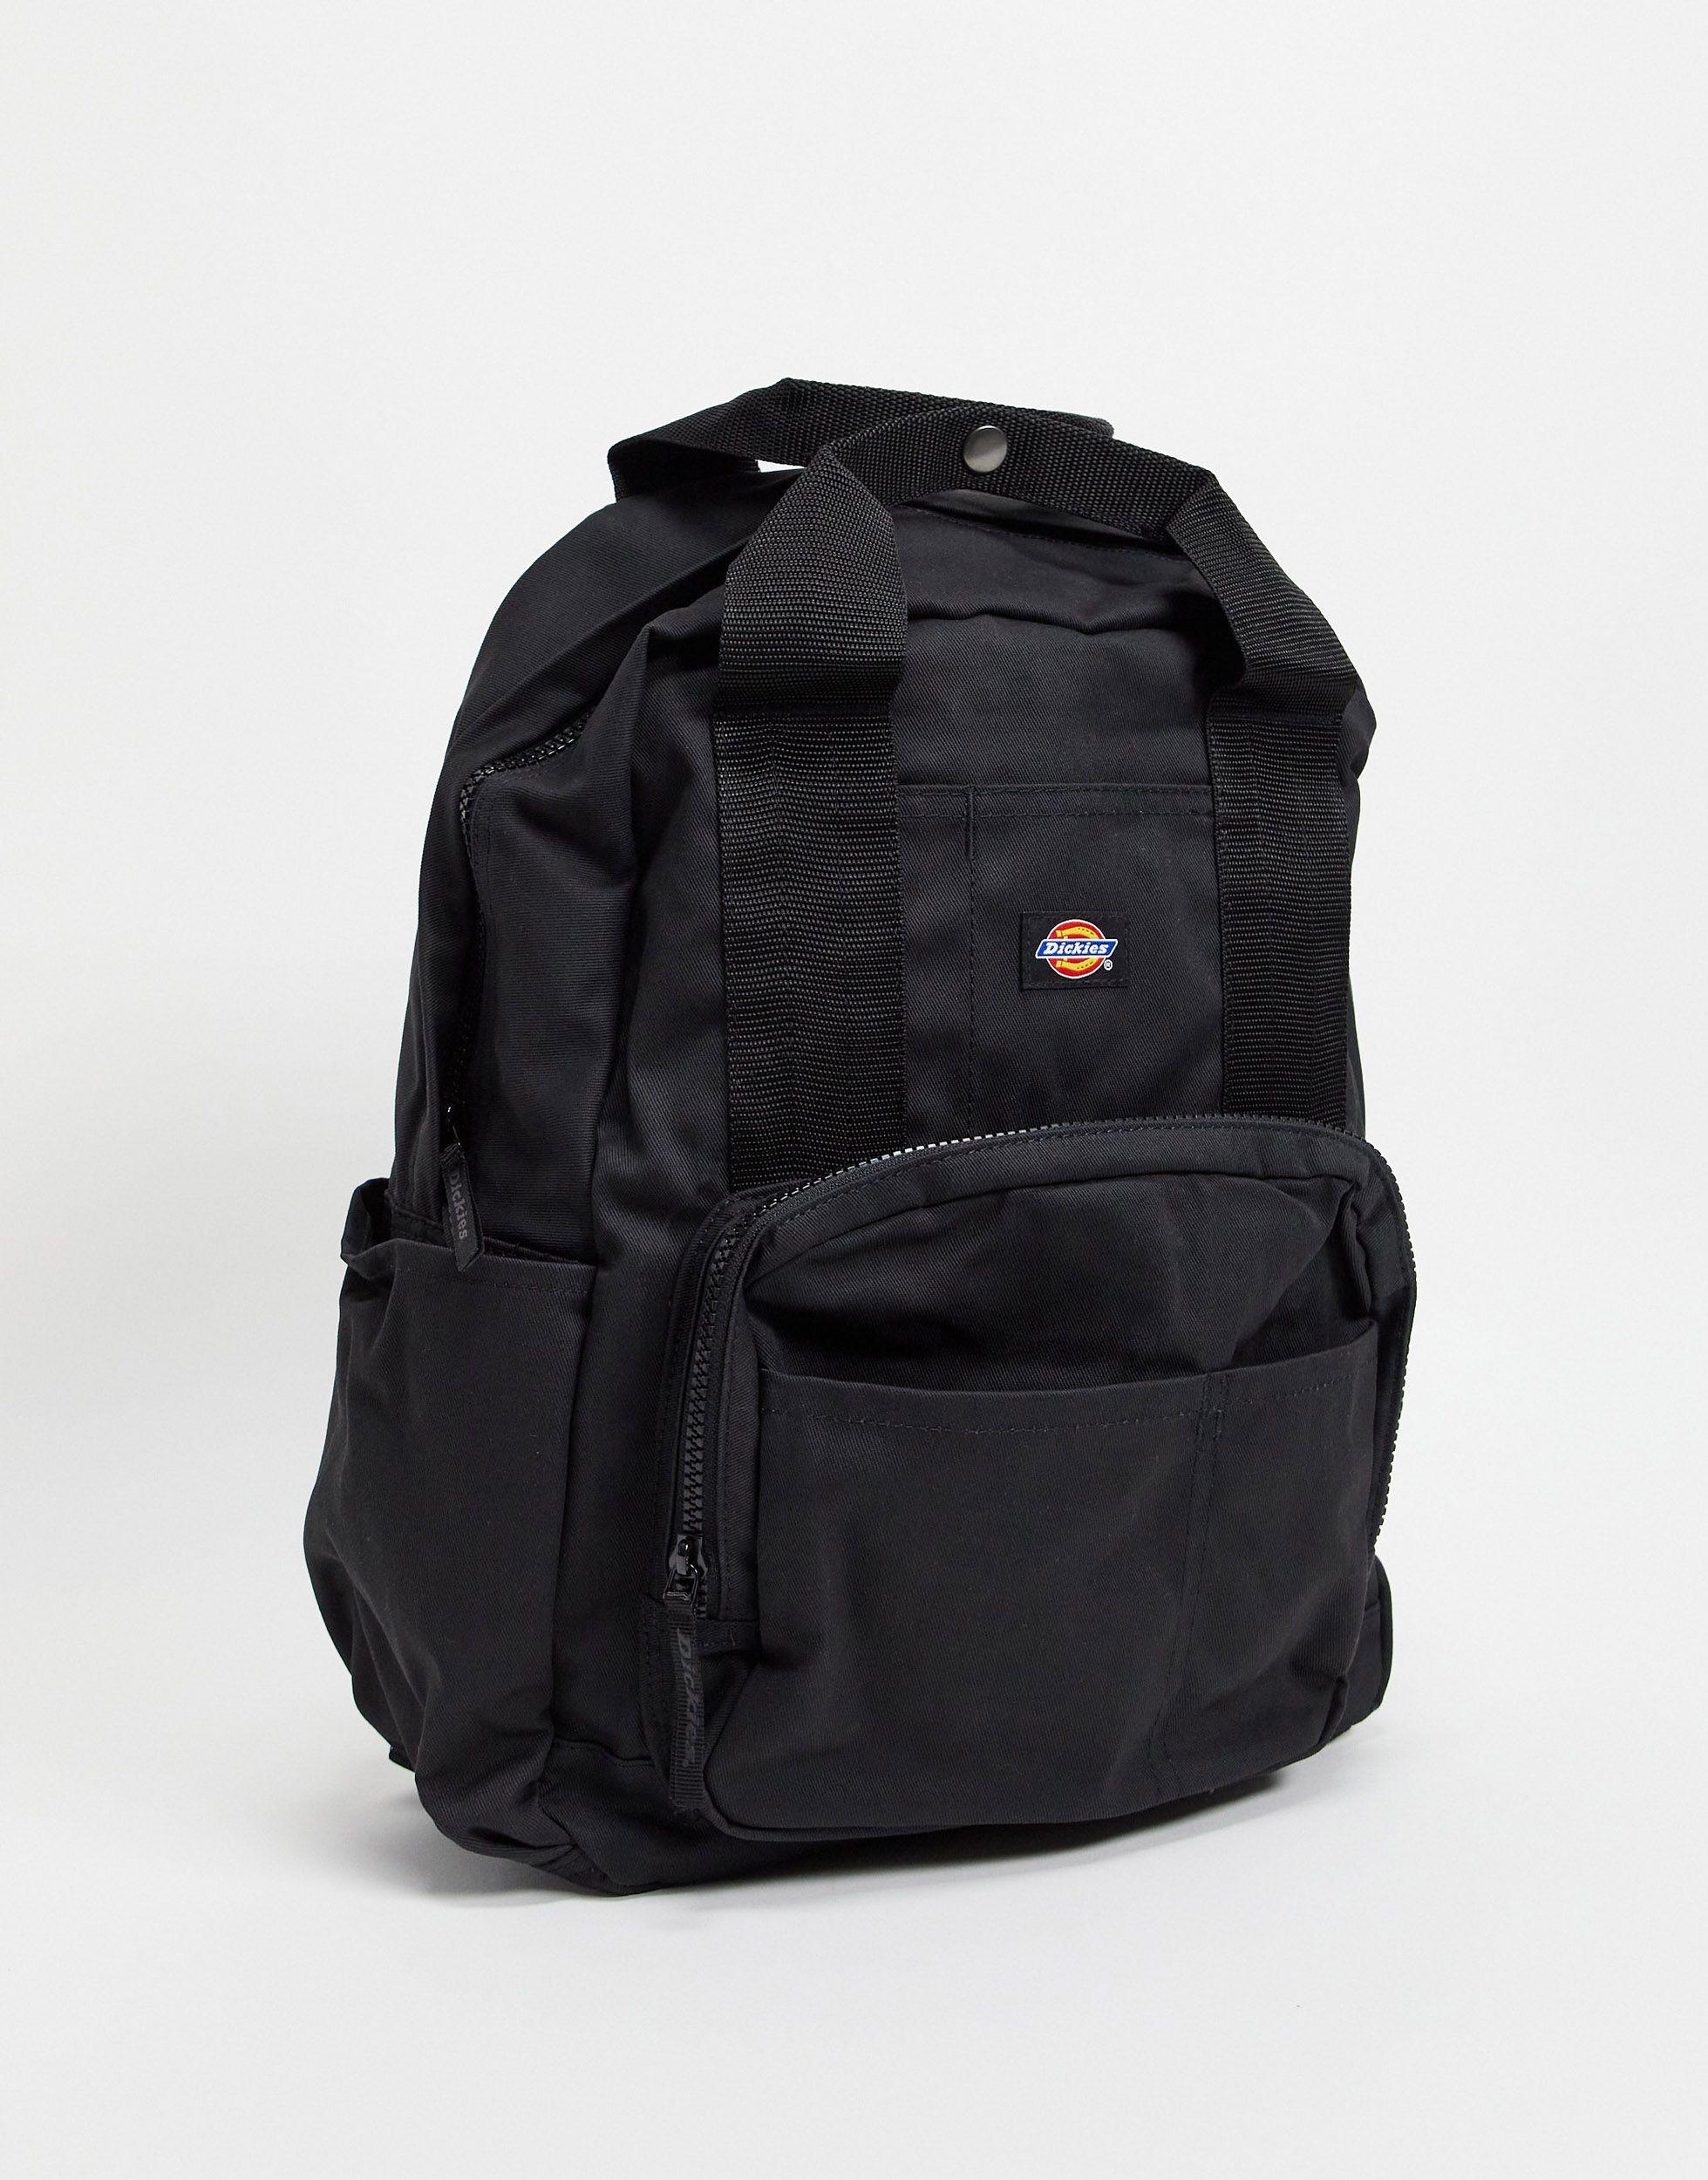 Dickies Lisbon Backpack in Black for Men - Lyst